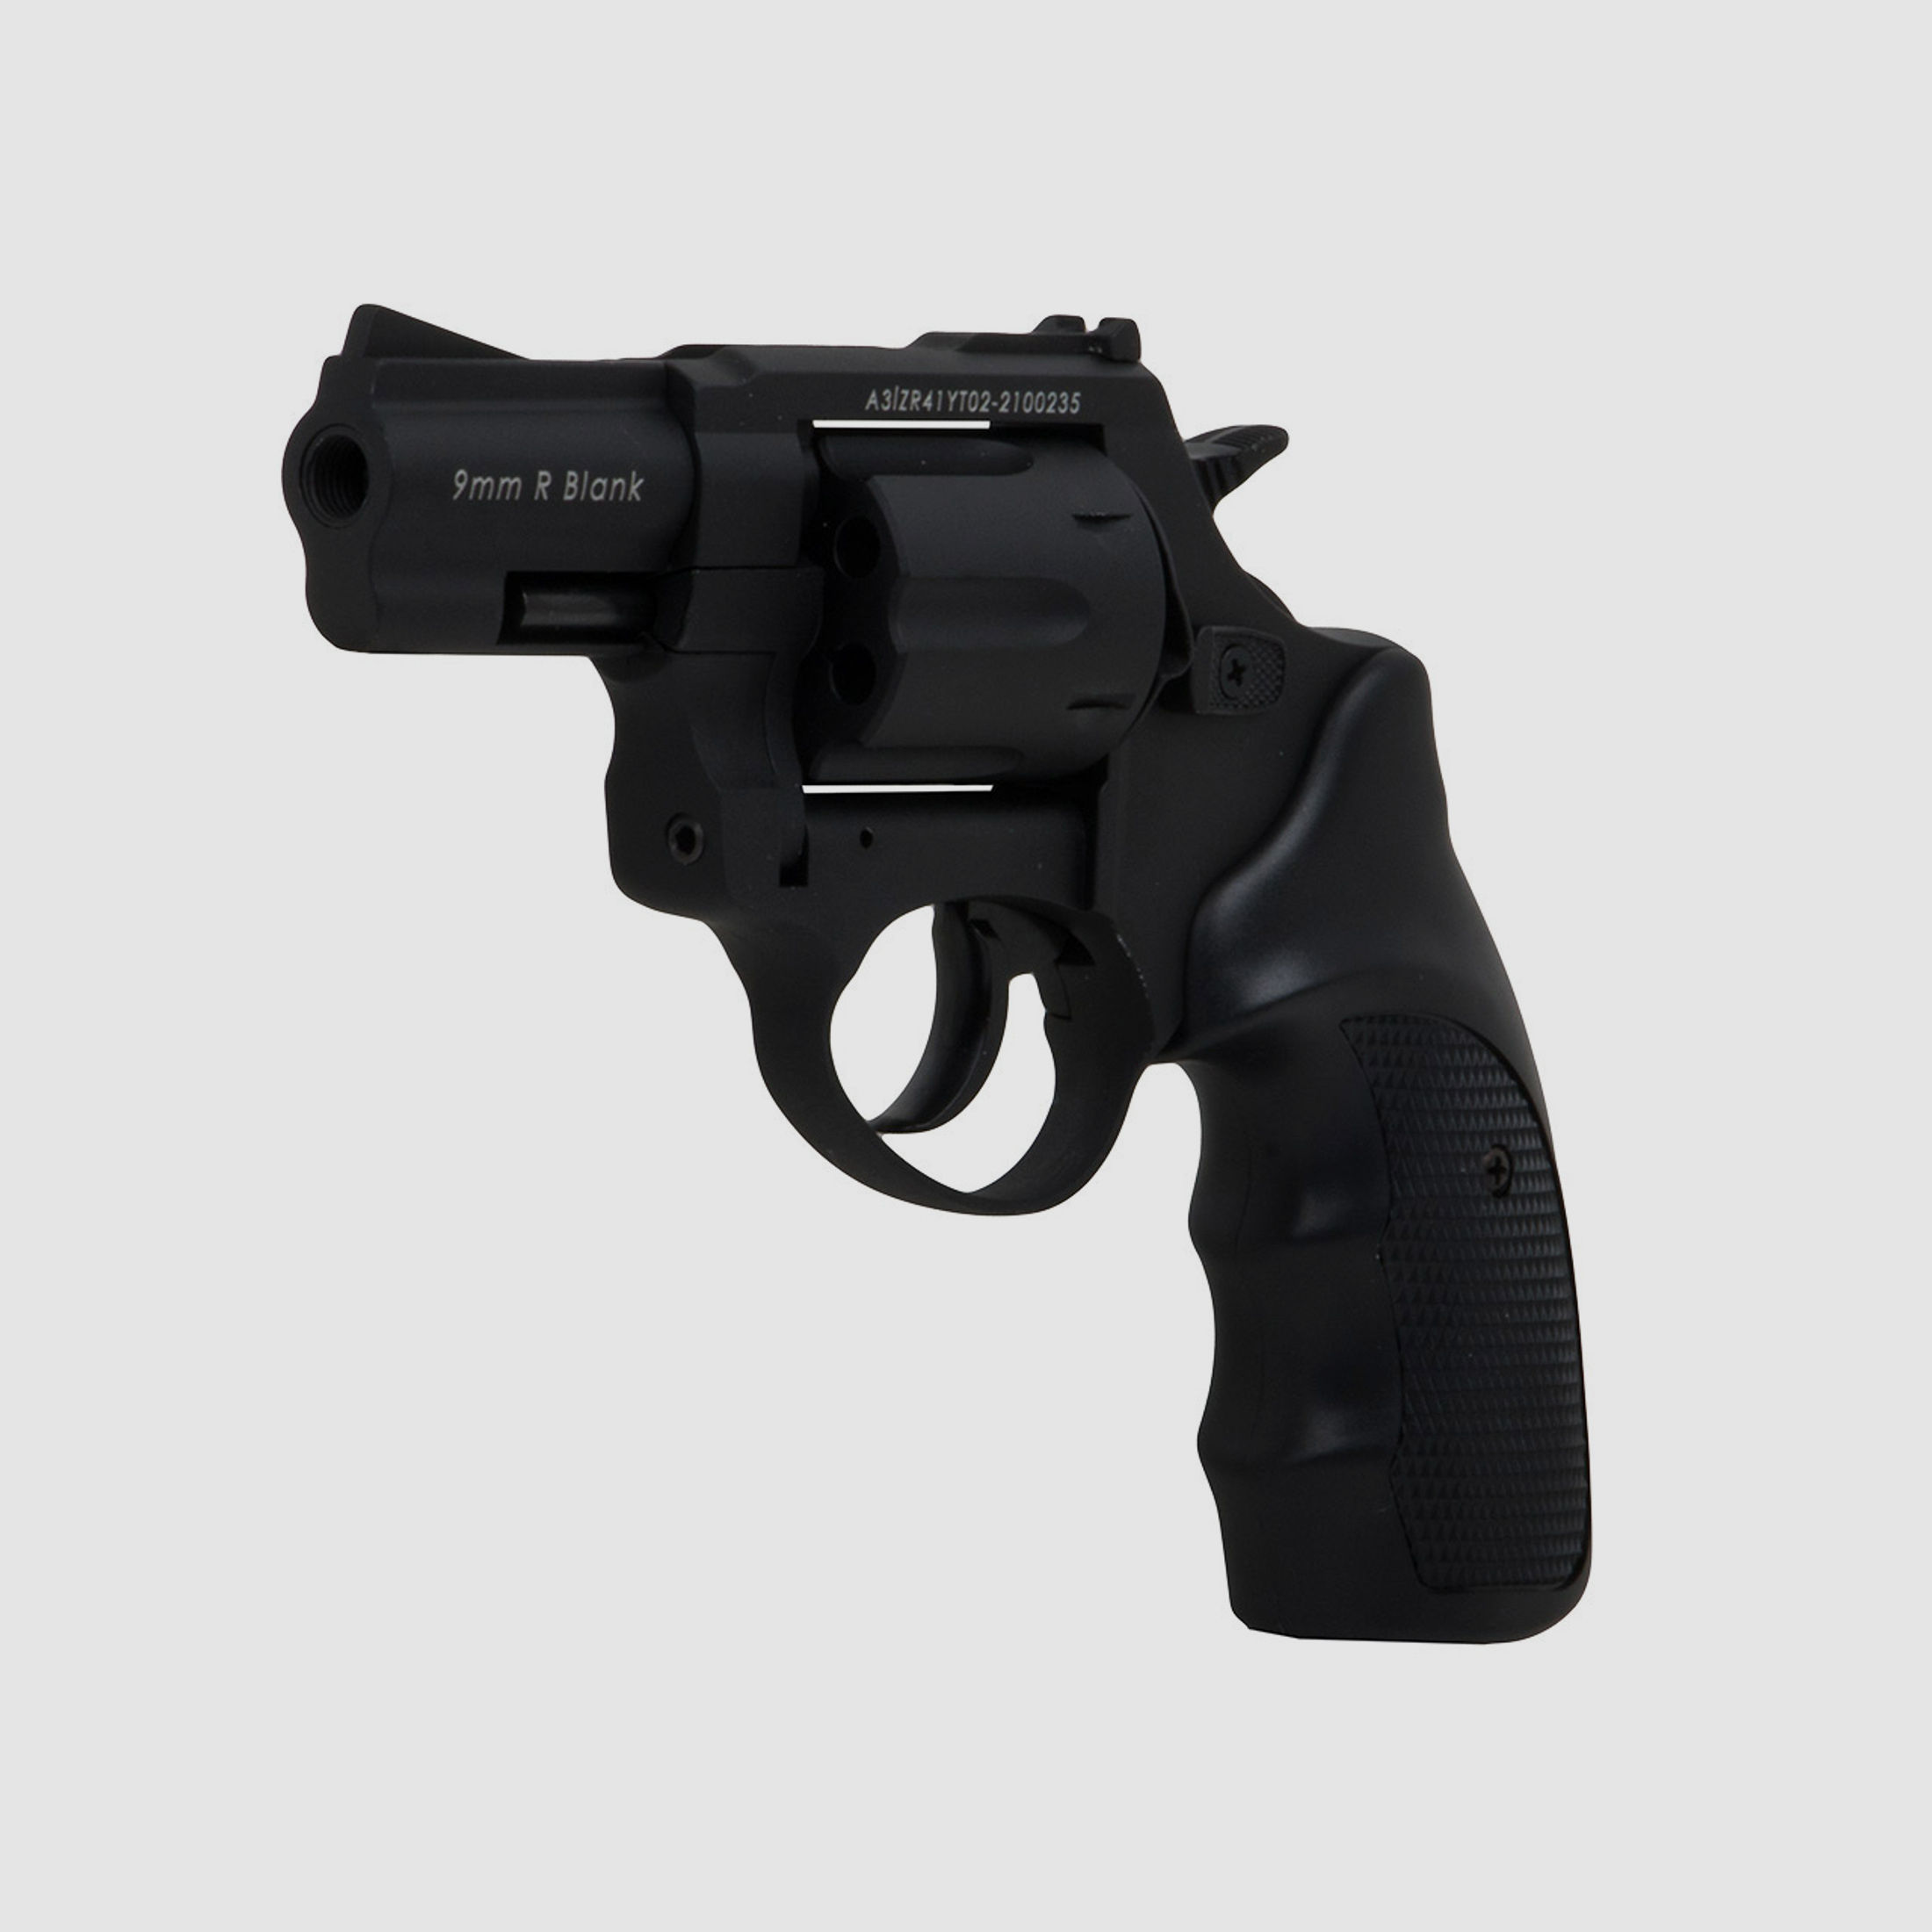 Schreckschuss Revolver Zoraki R1 Black 2,5 Zoll schwarz PTB 1022 Kaliber 9 mm R.K. (P18)+ 50 Schuss